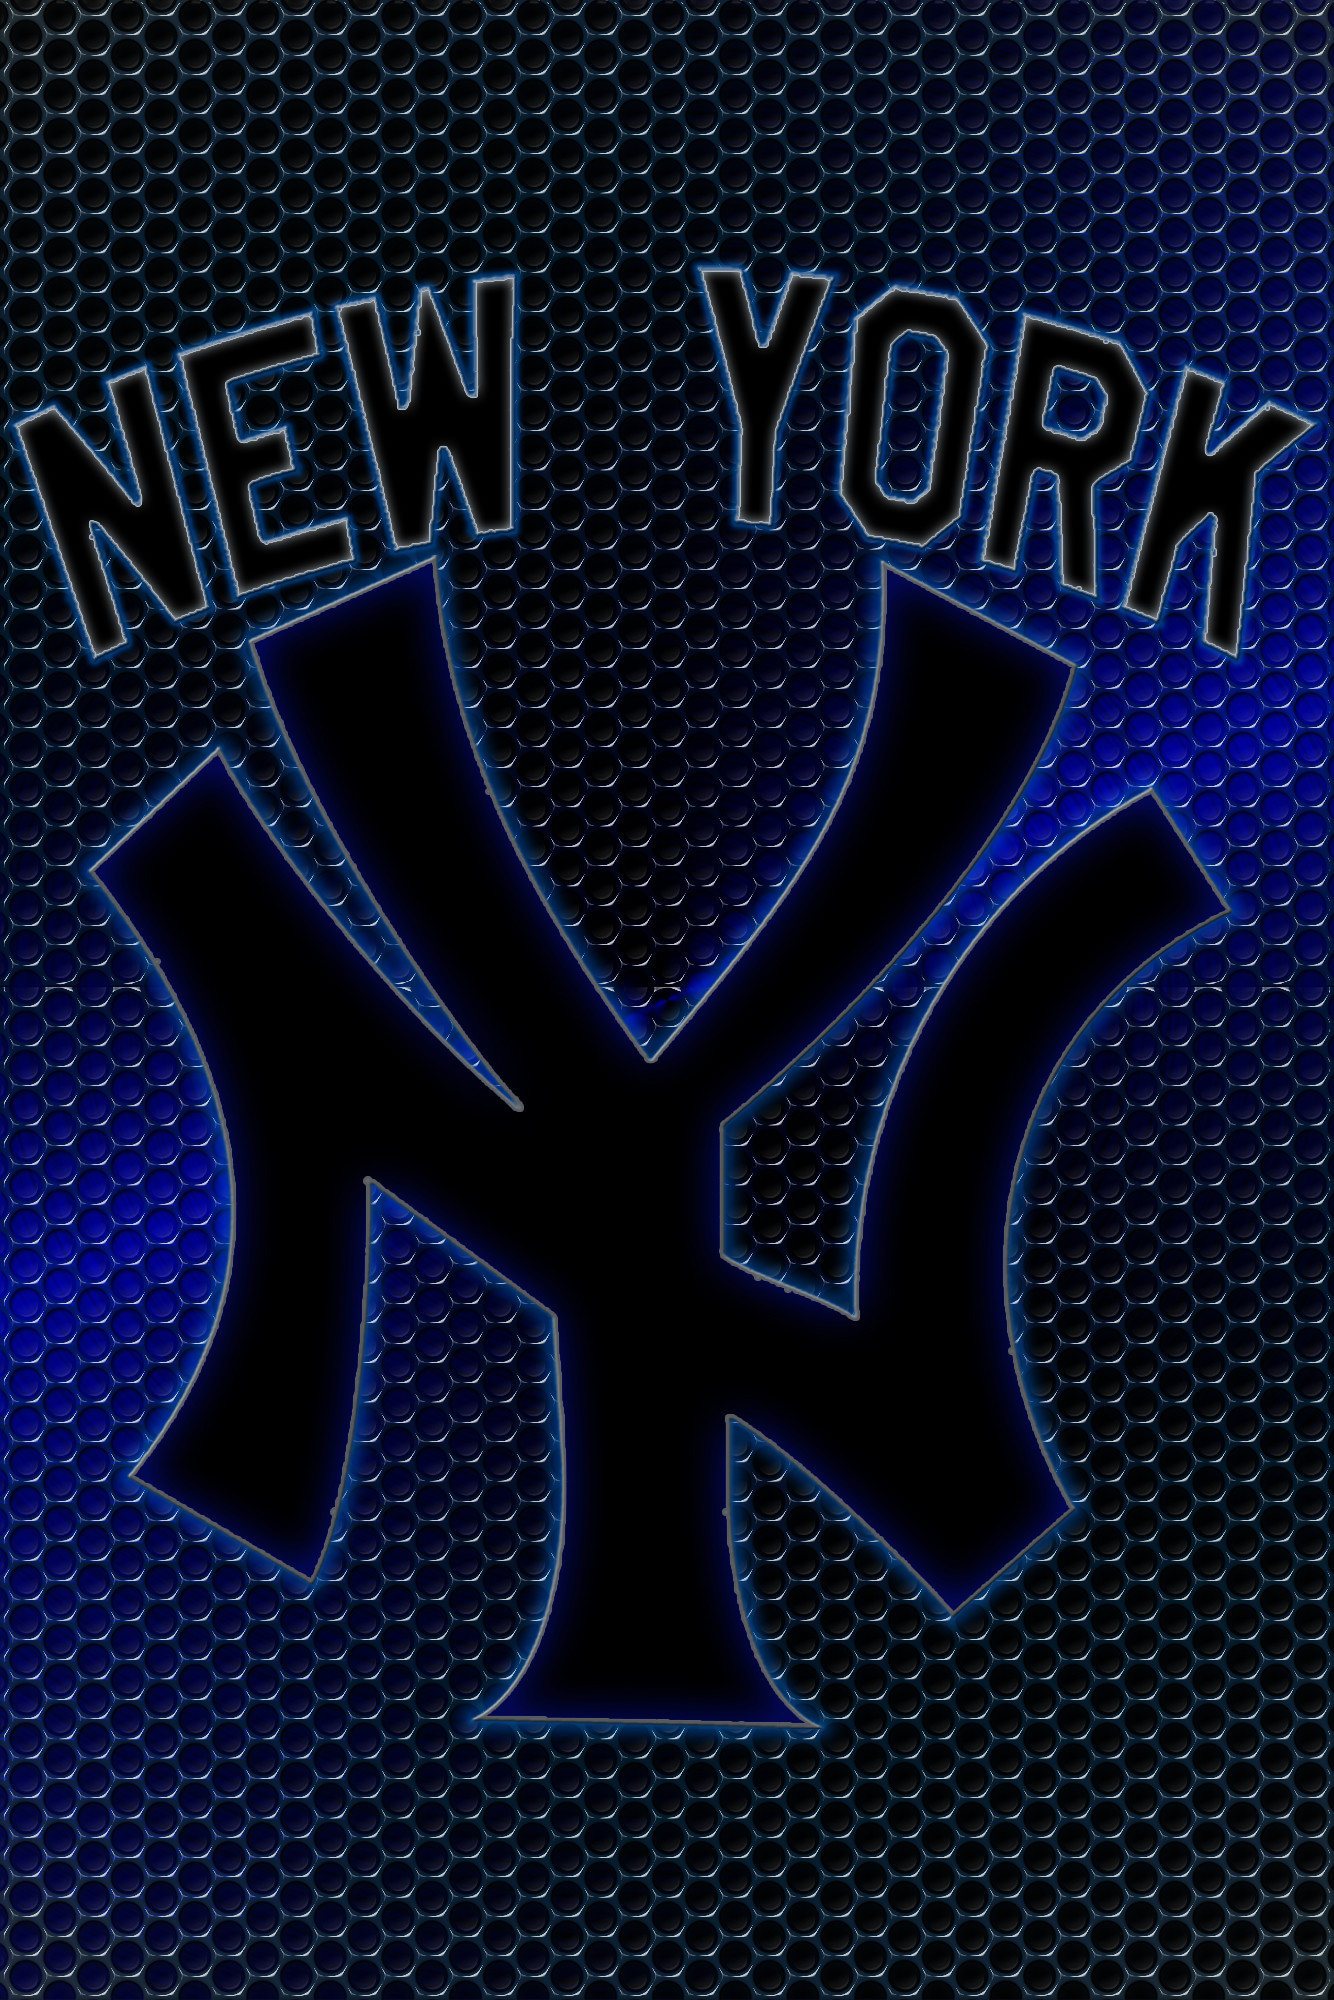 Yankees Phone Wallpapers on WallpaperDog